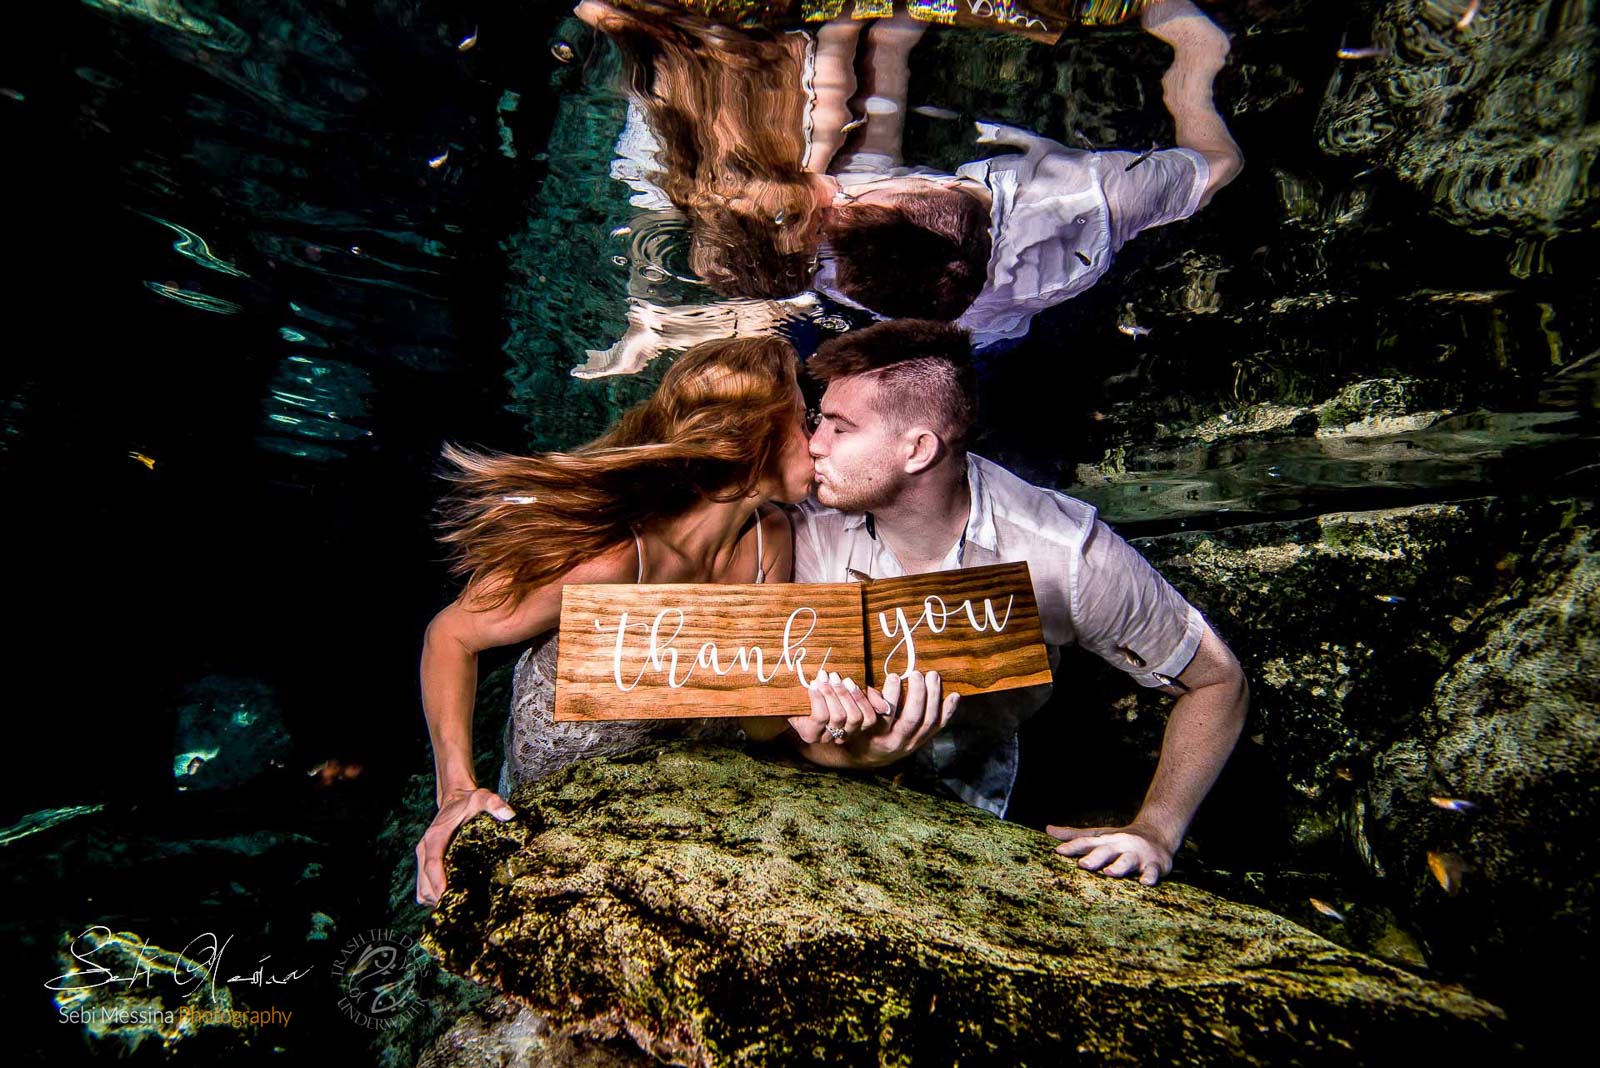 Underwater Photos in a cenote (Mexico) - Sebi Messina Photography